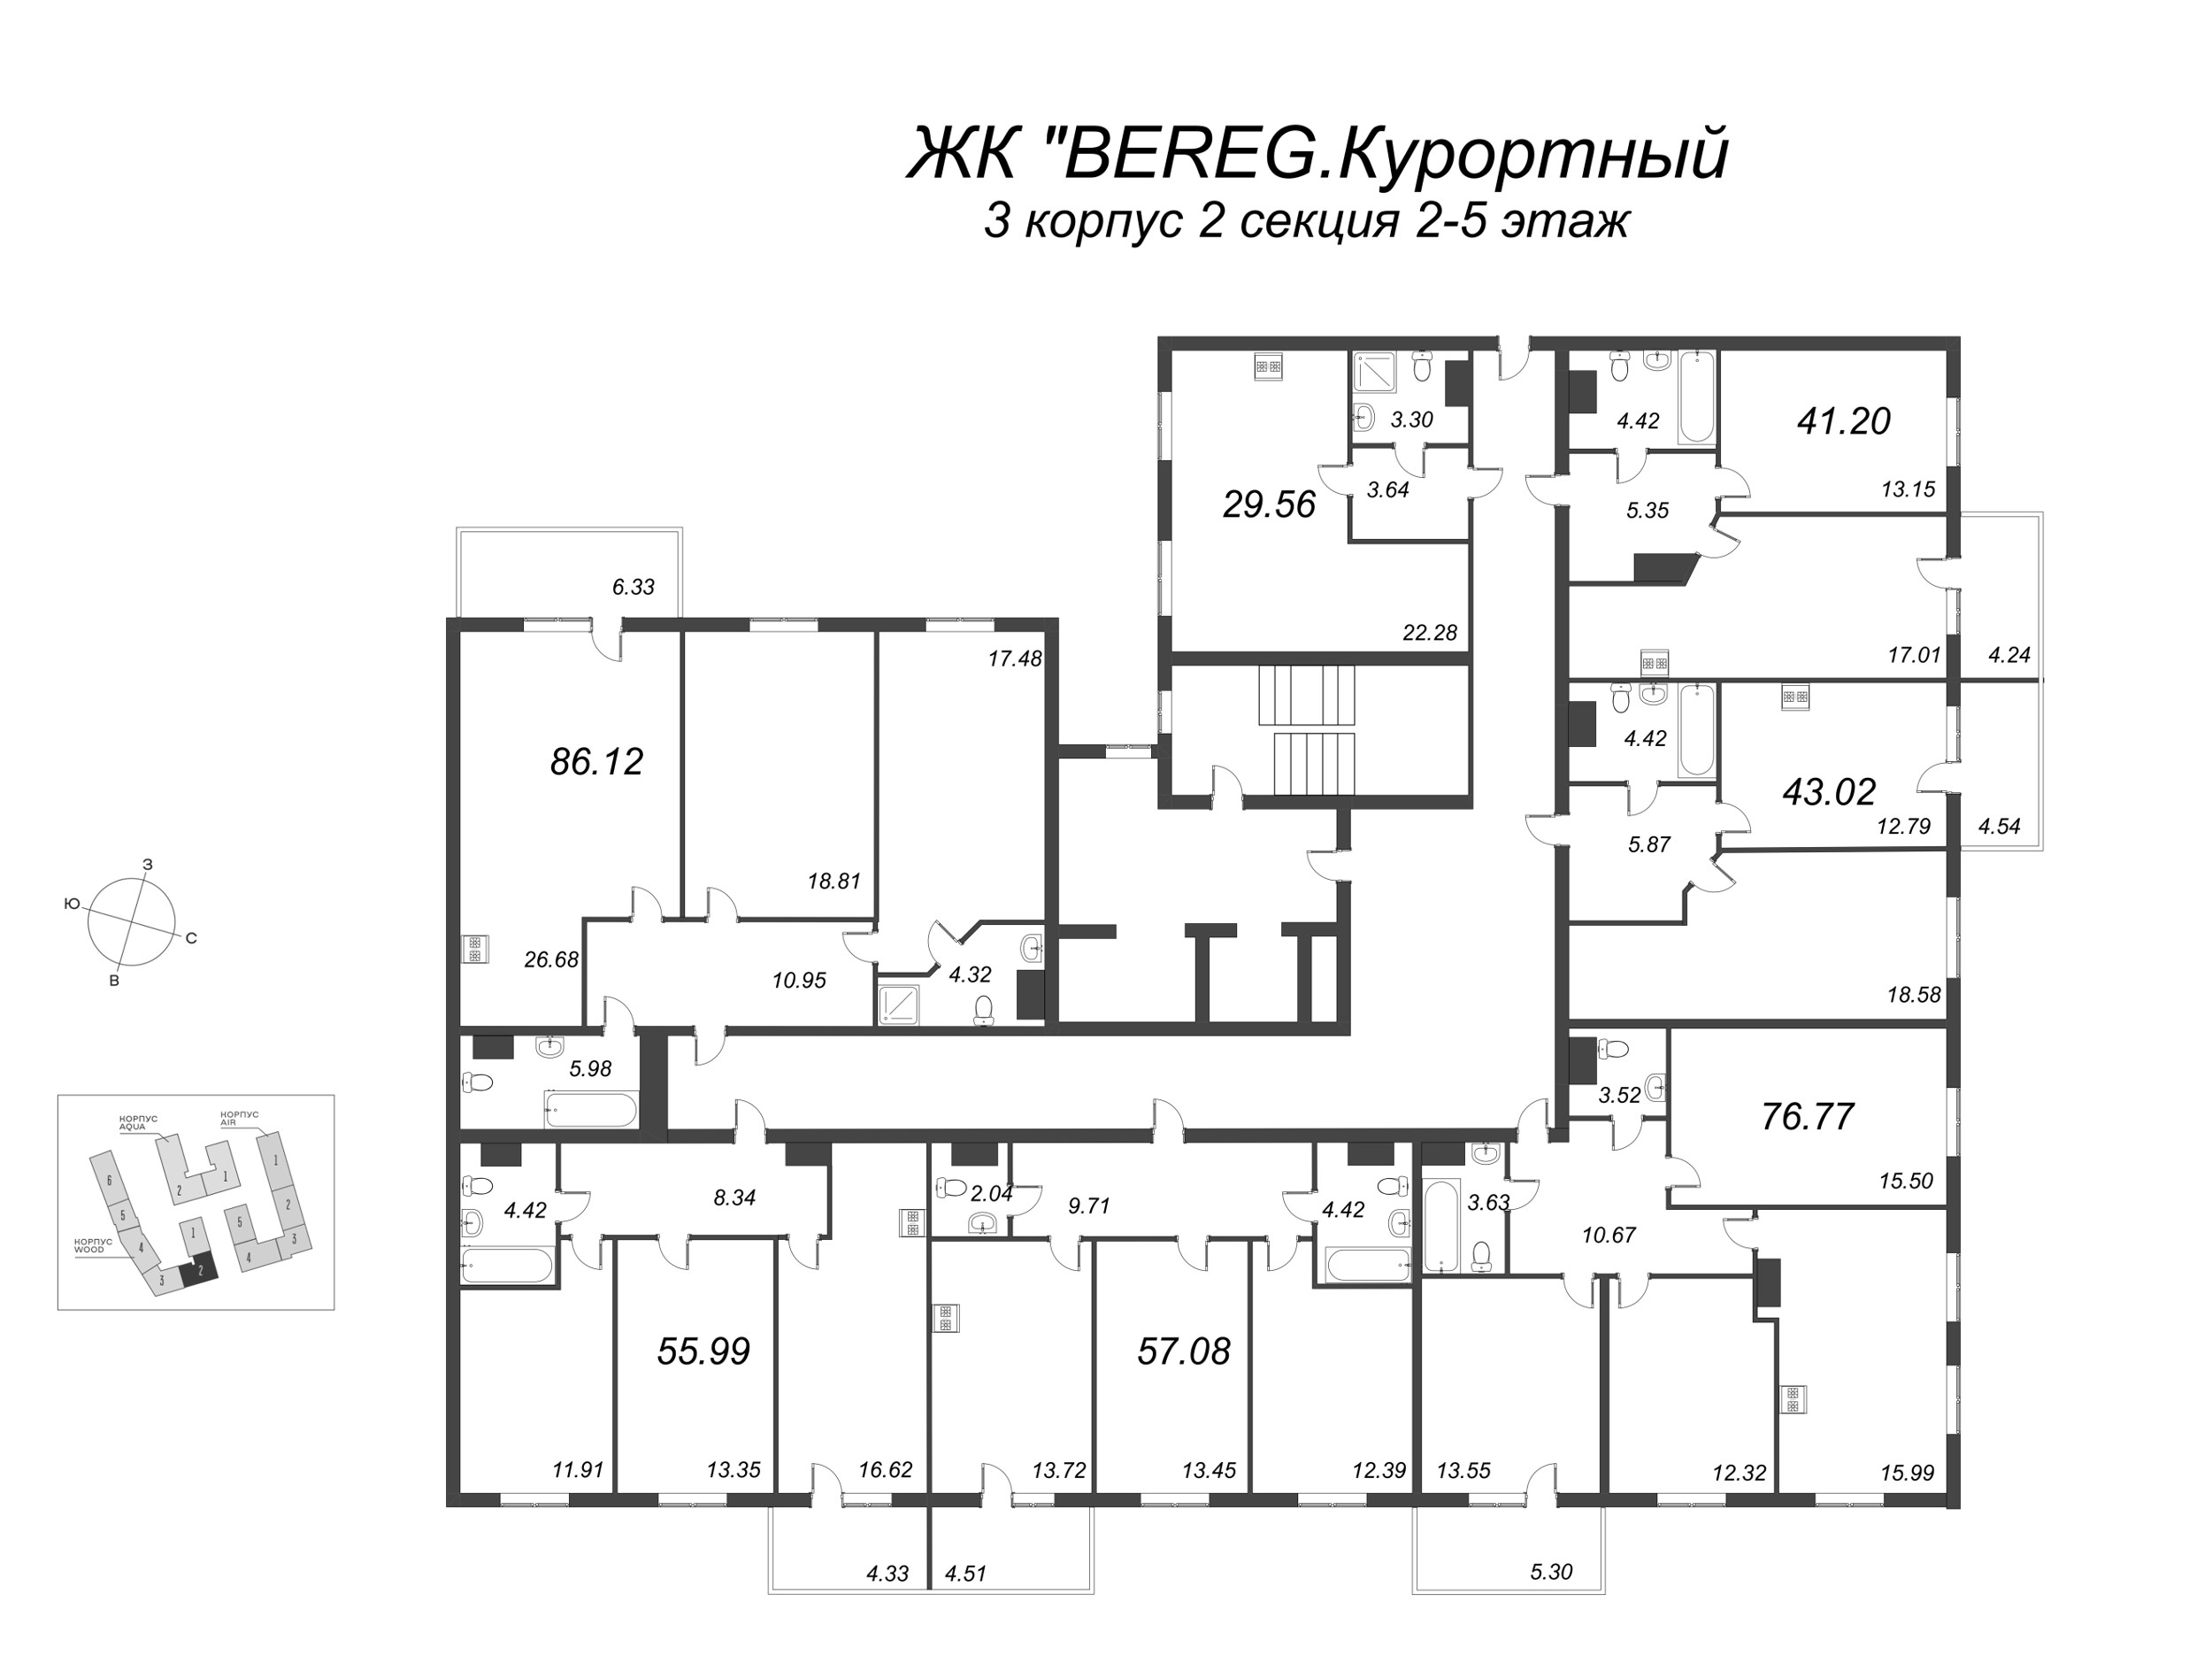 2-комнатная (Евро) квартира, 41.2 м² - планировка этажа